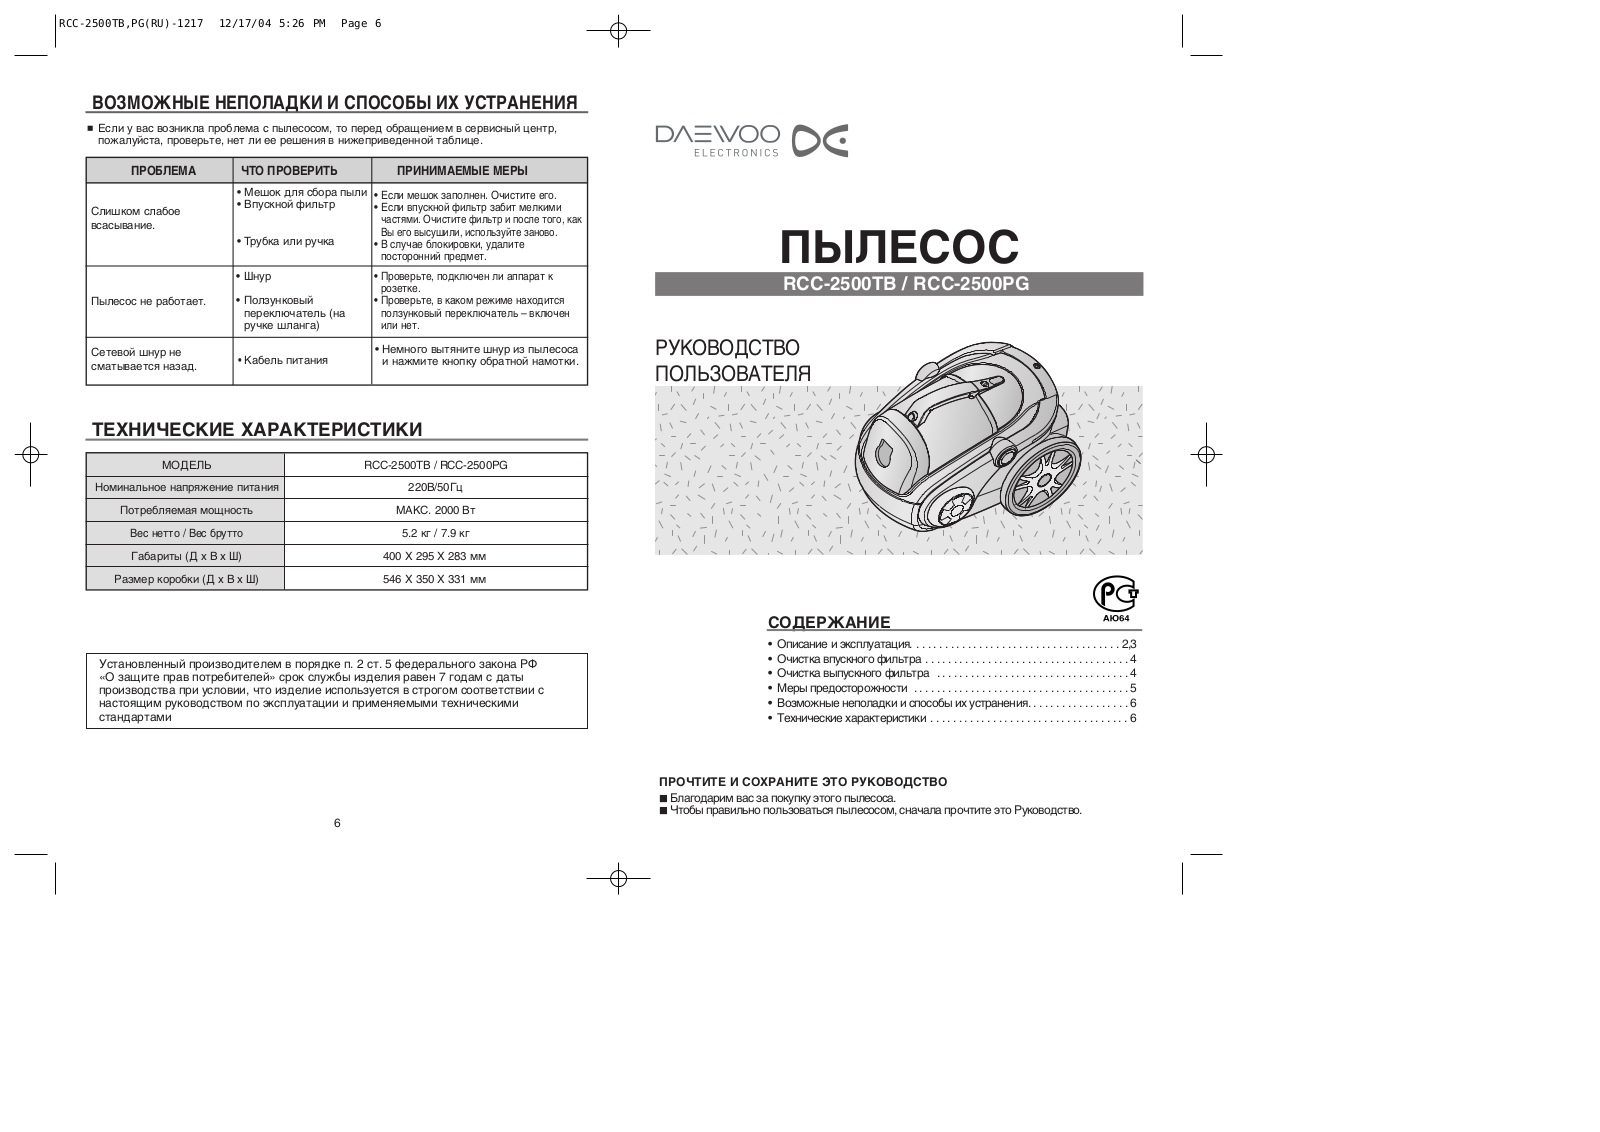 Daewoo RCC-2500PG User Manual